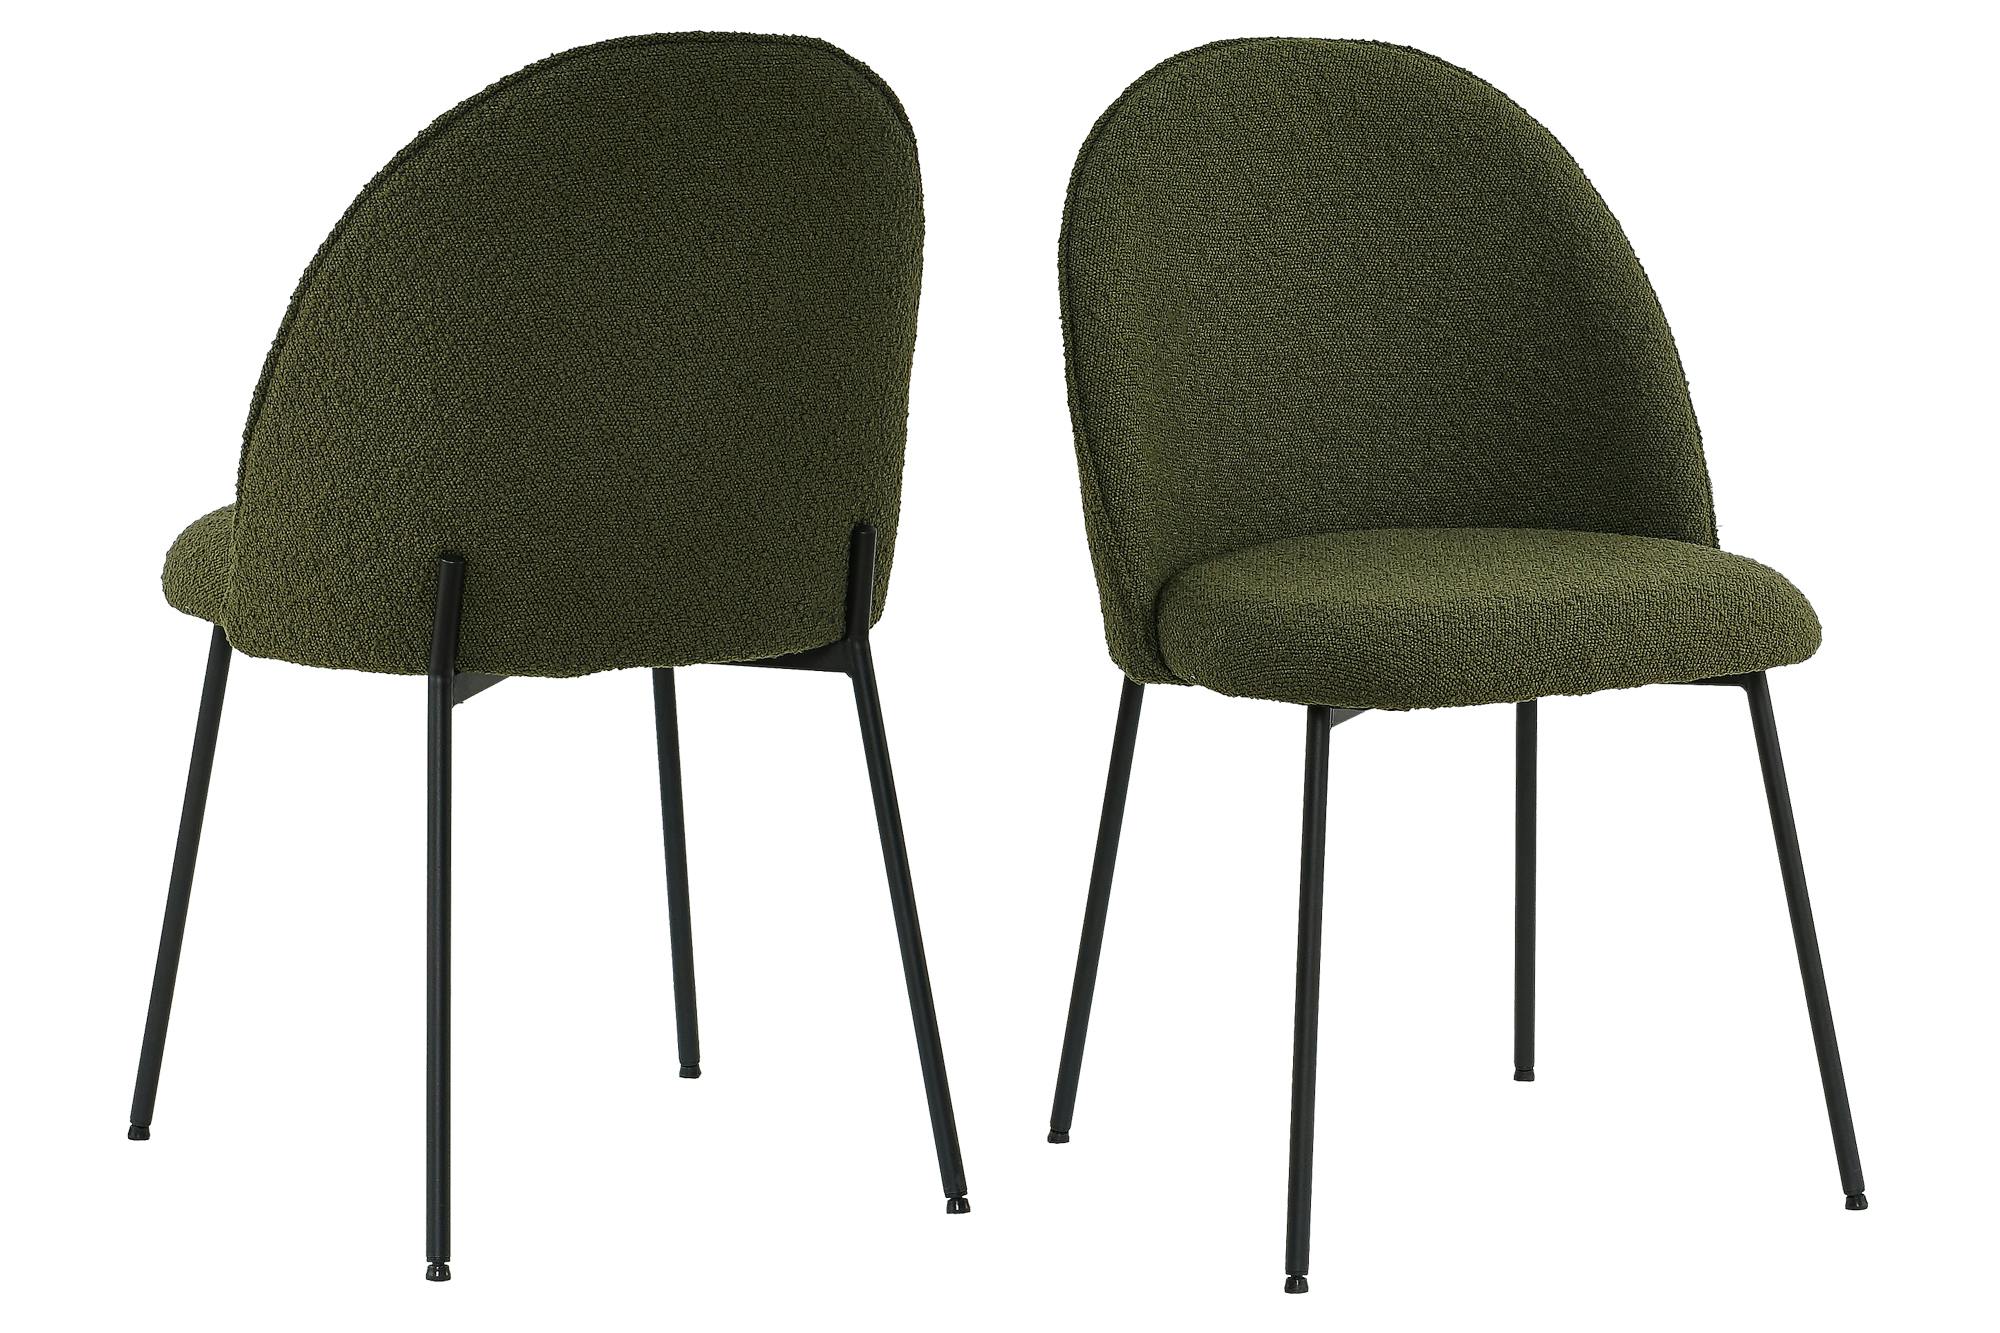 T-Bouclé Stuhl | | gepolstert |02412-03 schwarz SIT&CHAIRS | METRO | Pad |Serie grün| 2er-Set Metall Tailor Beine Chair Möbel B57xT54xH52cm Tom SIT Marktplatz